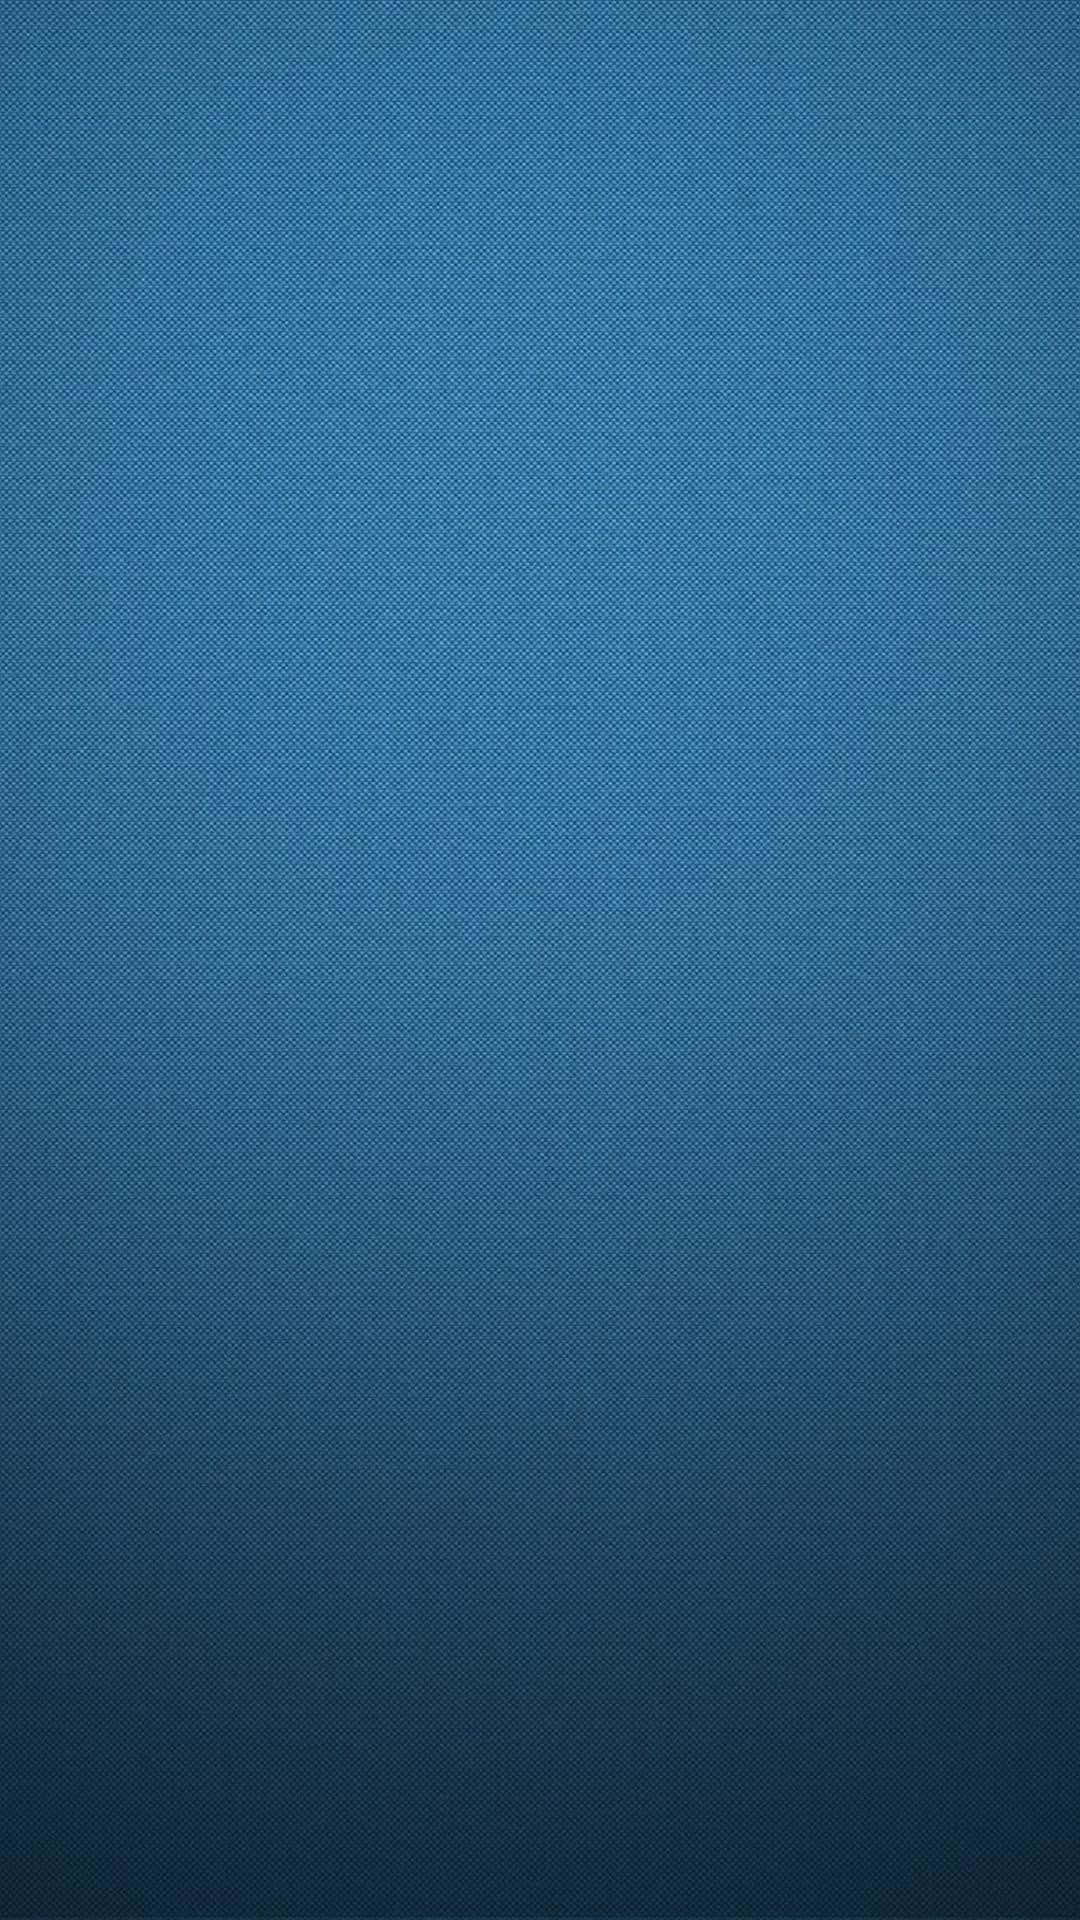 Solid Blå Iphone Wallpaper